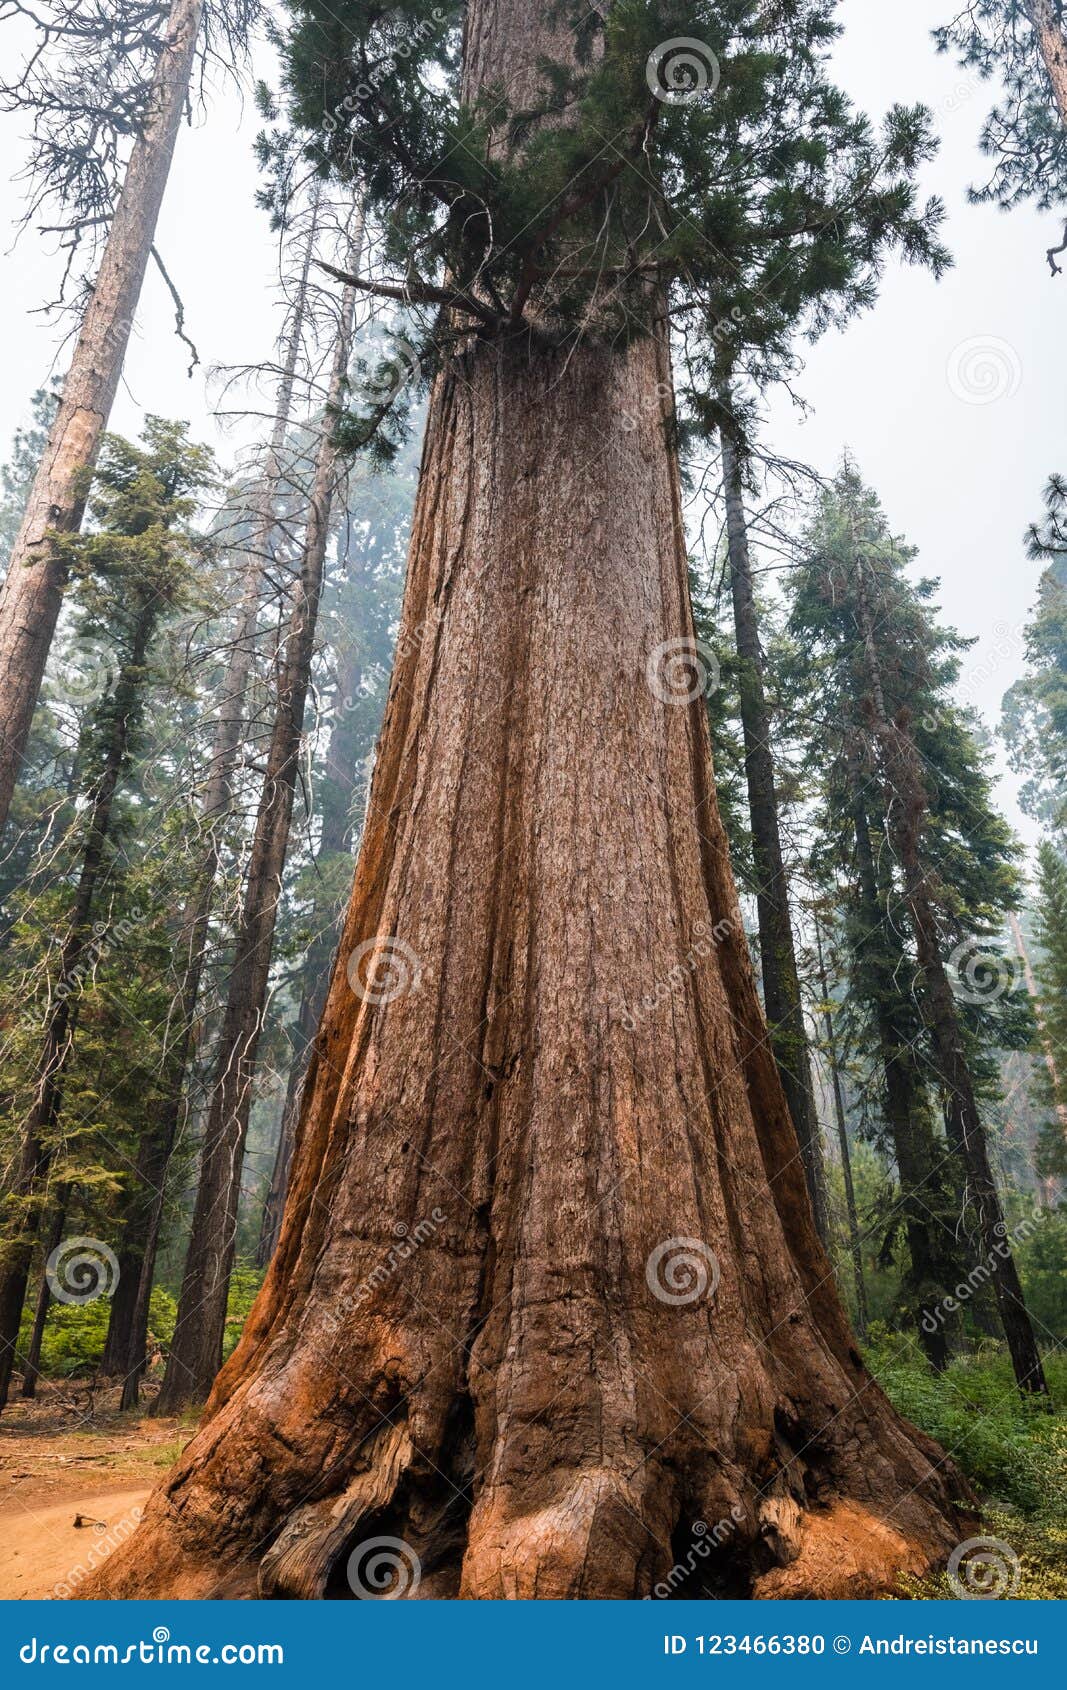 giant sequoia trees in mariposa grove, yosemite national park